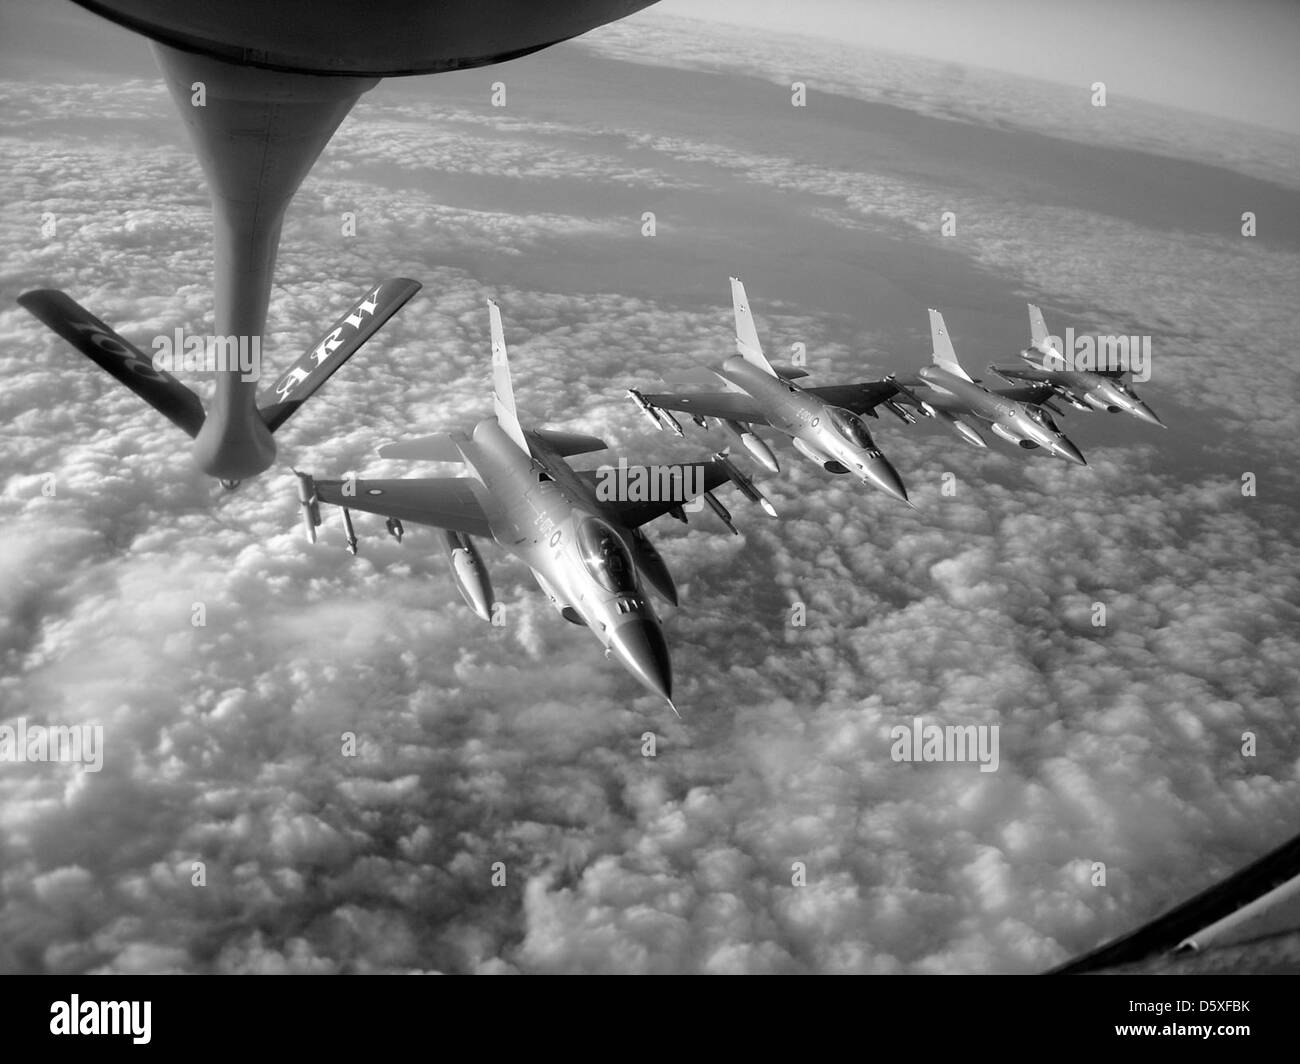 Vier Royal Danish Air Force Piloten fliegen General Dynamics F-16 "Fighting Falcons". Stockfoto